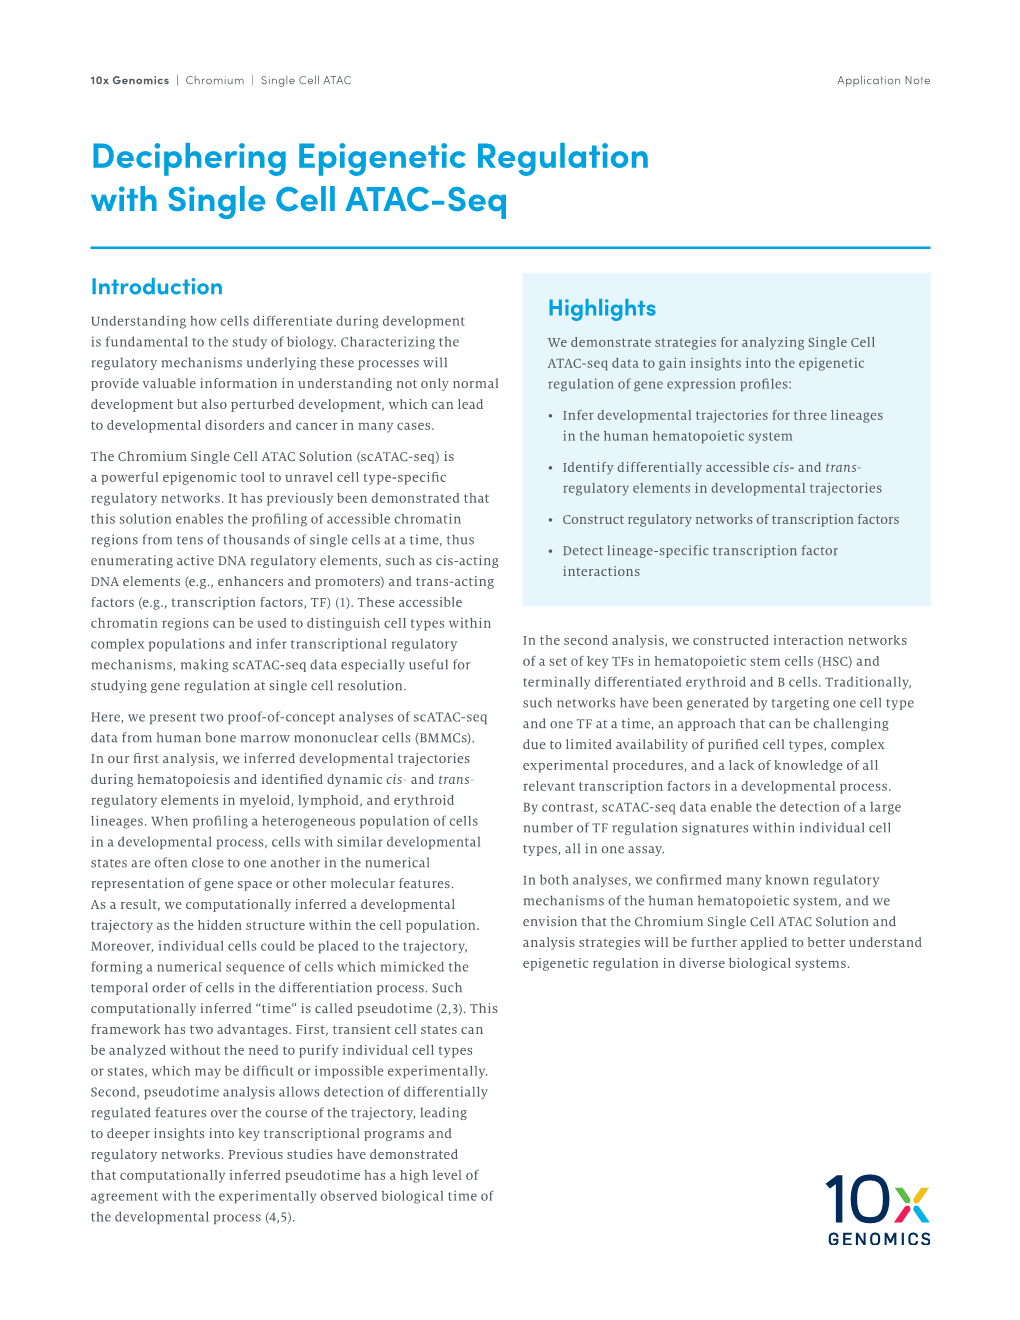 Deciphering Epigenetic Regulation with Single Cell ATAC-Seq